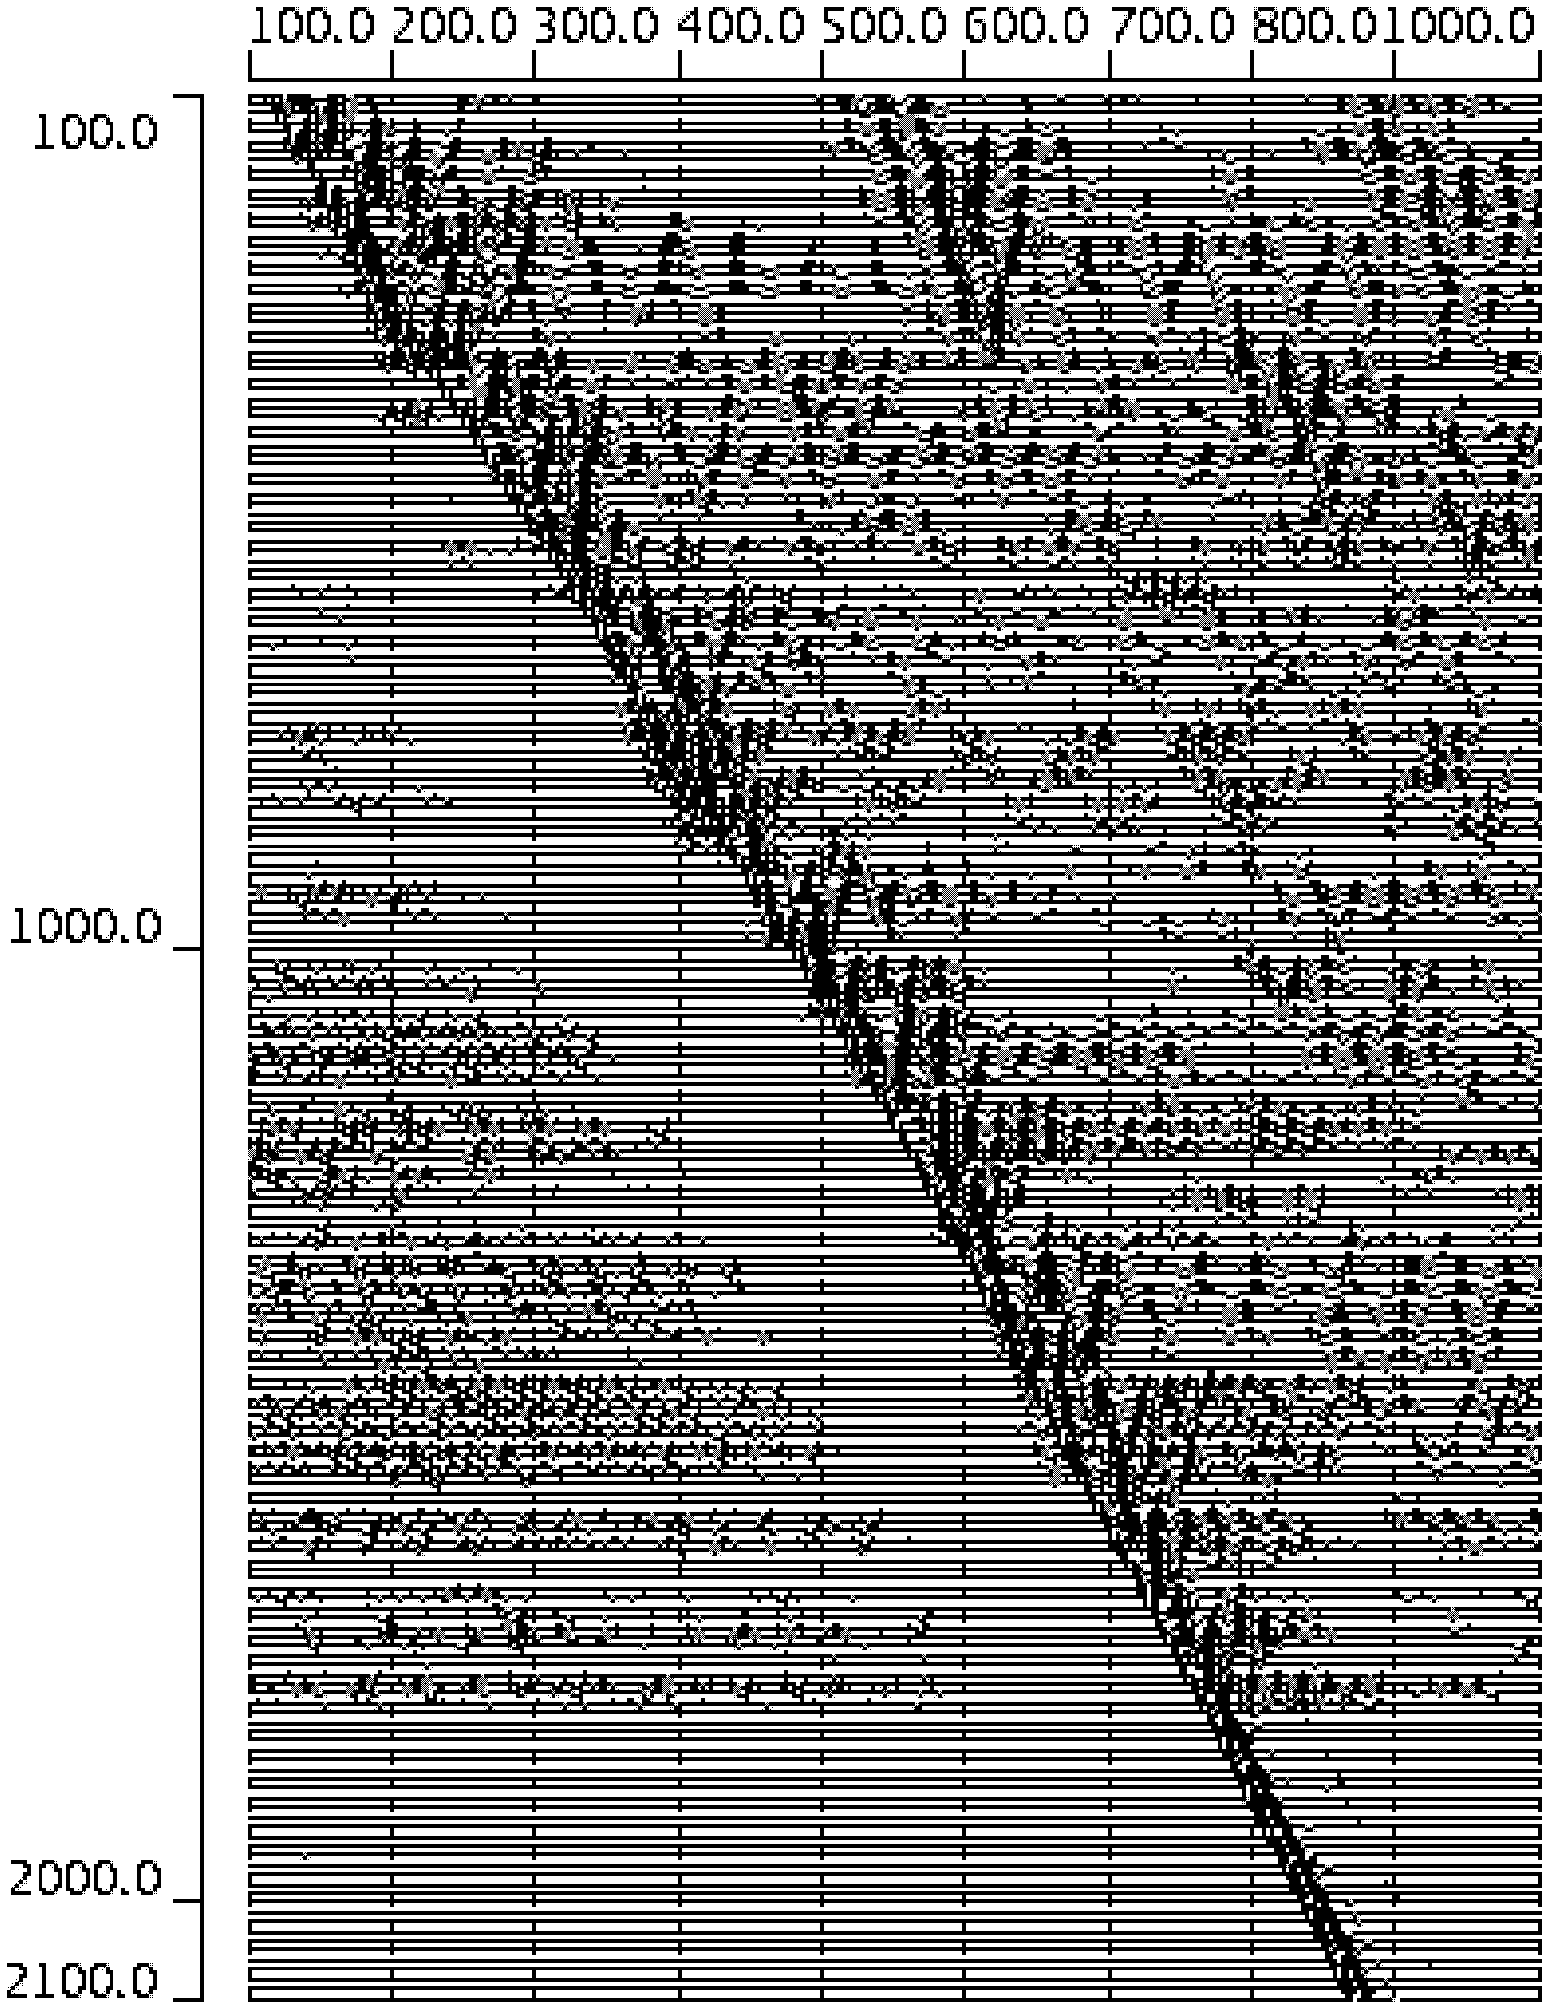 Casing-harmonic-containing vertical seismic profile data interval velocity inversion method